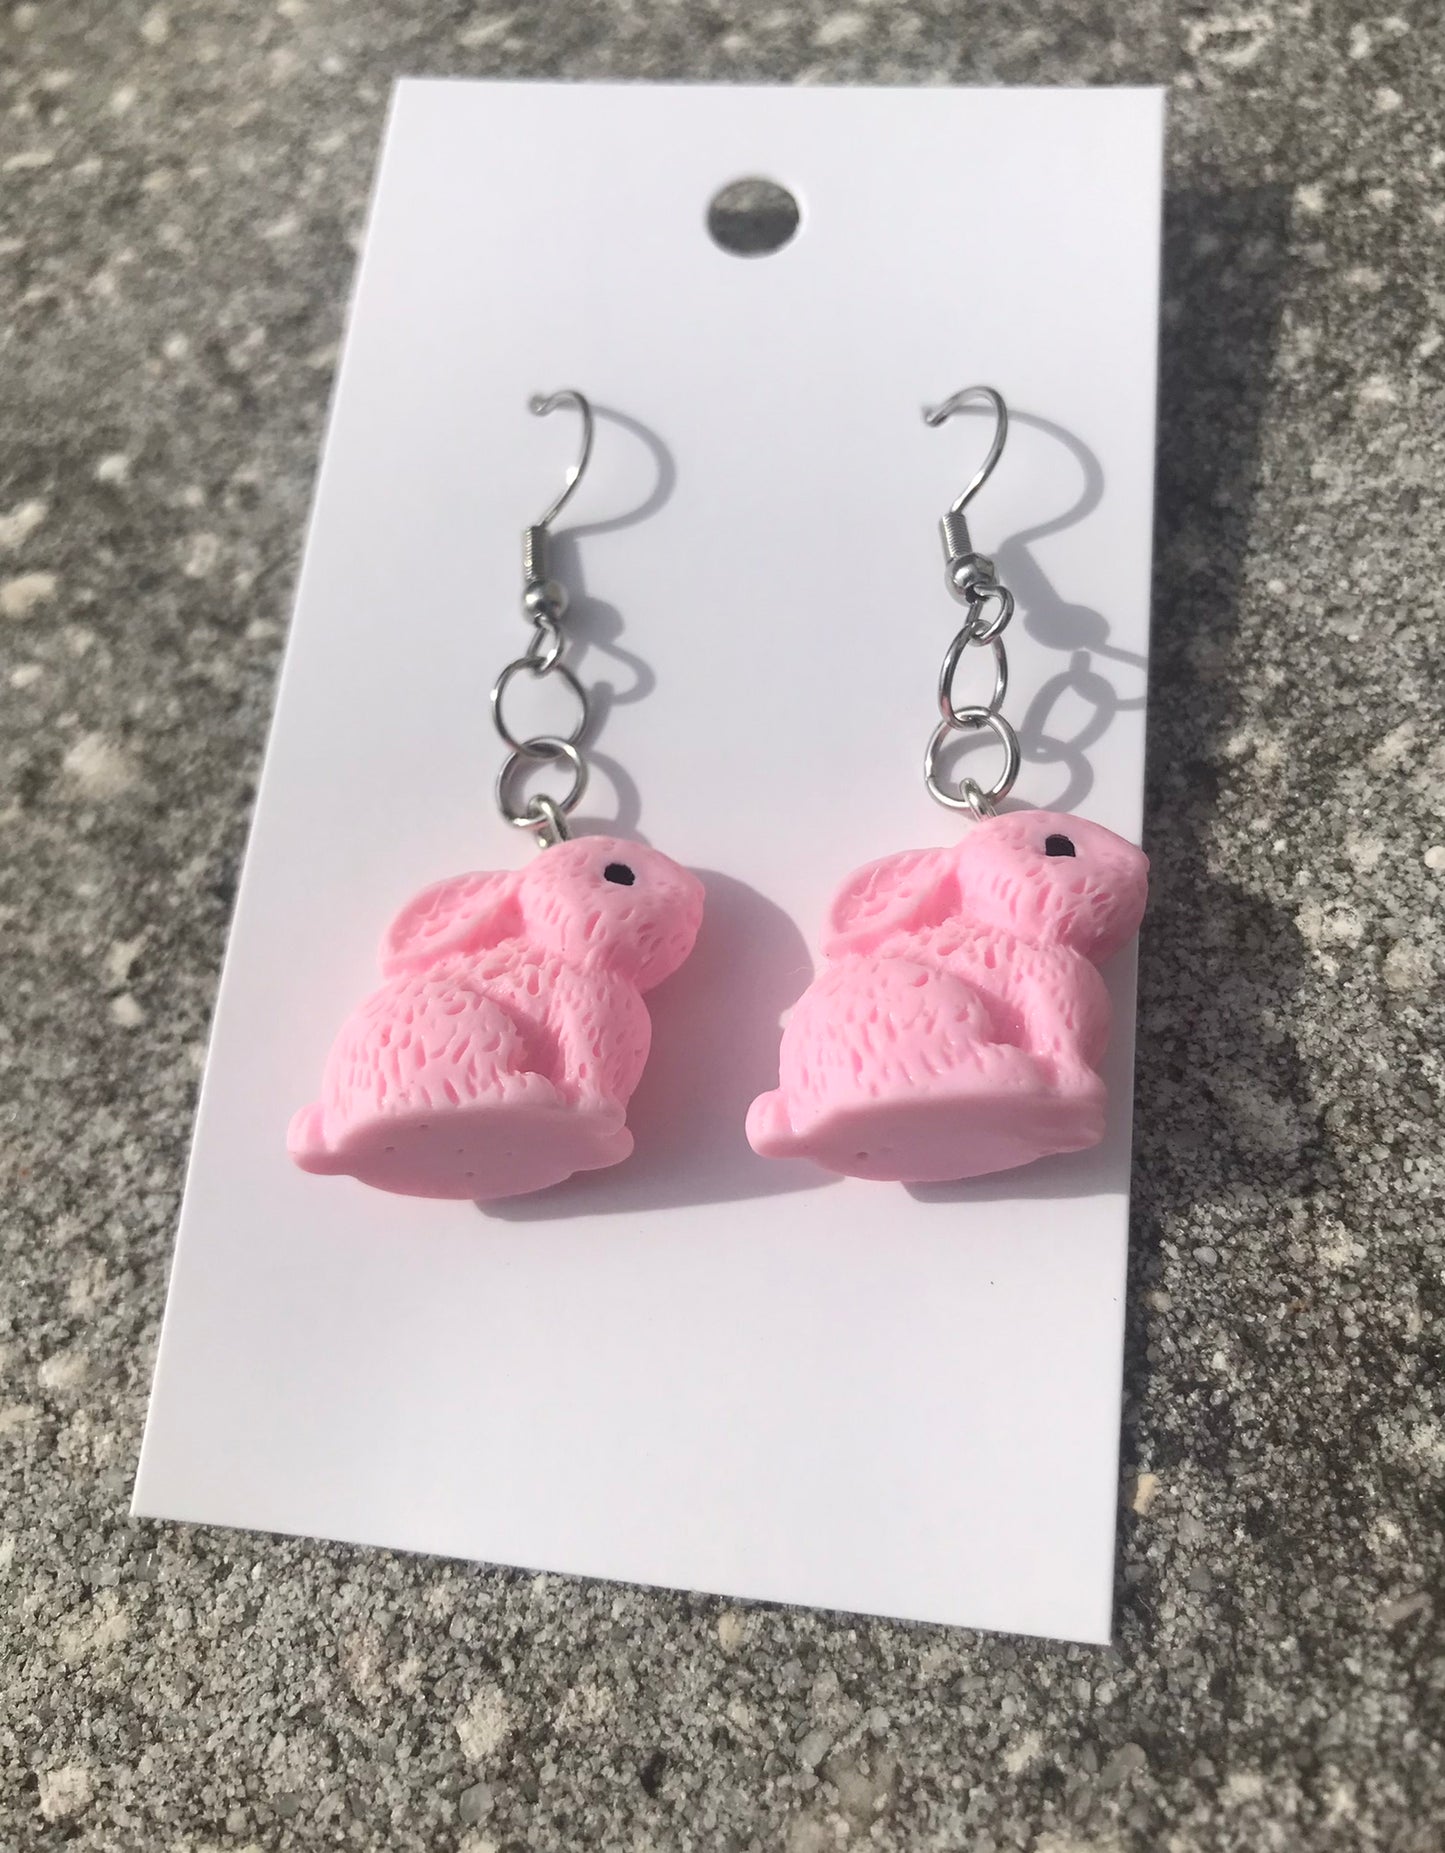 3D Bunnies Earrings